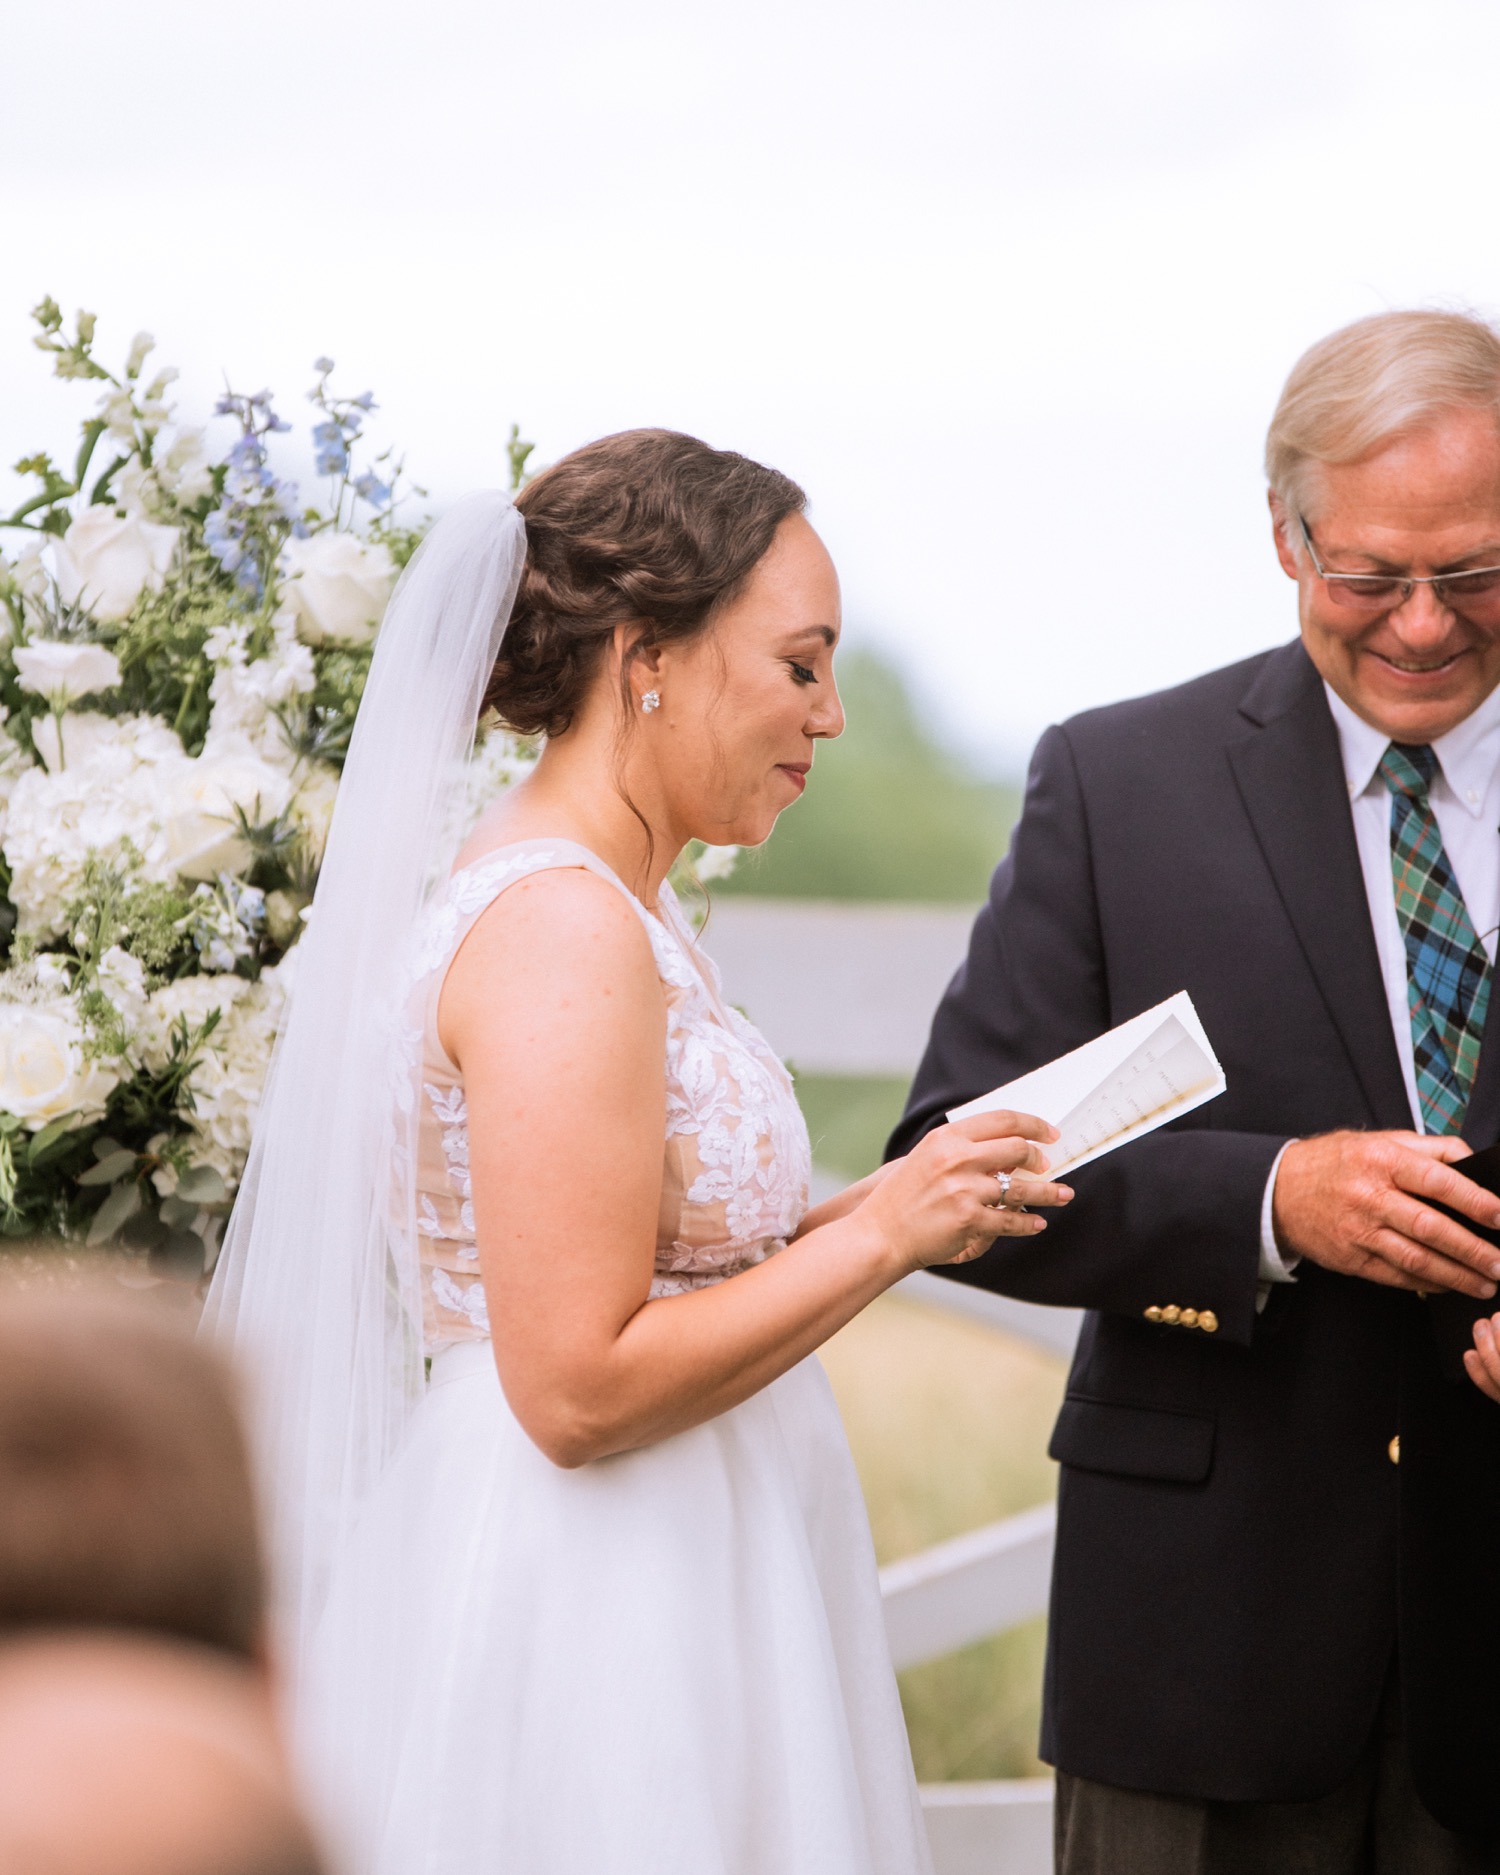 Bride reading vows during wedding at James Monroe's Highland in Charlottesville, VA wedding ceremony